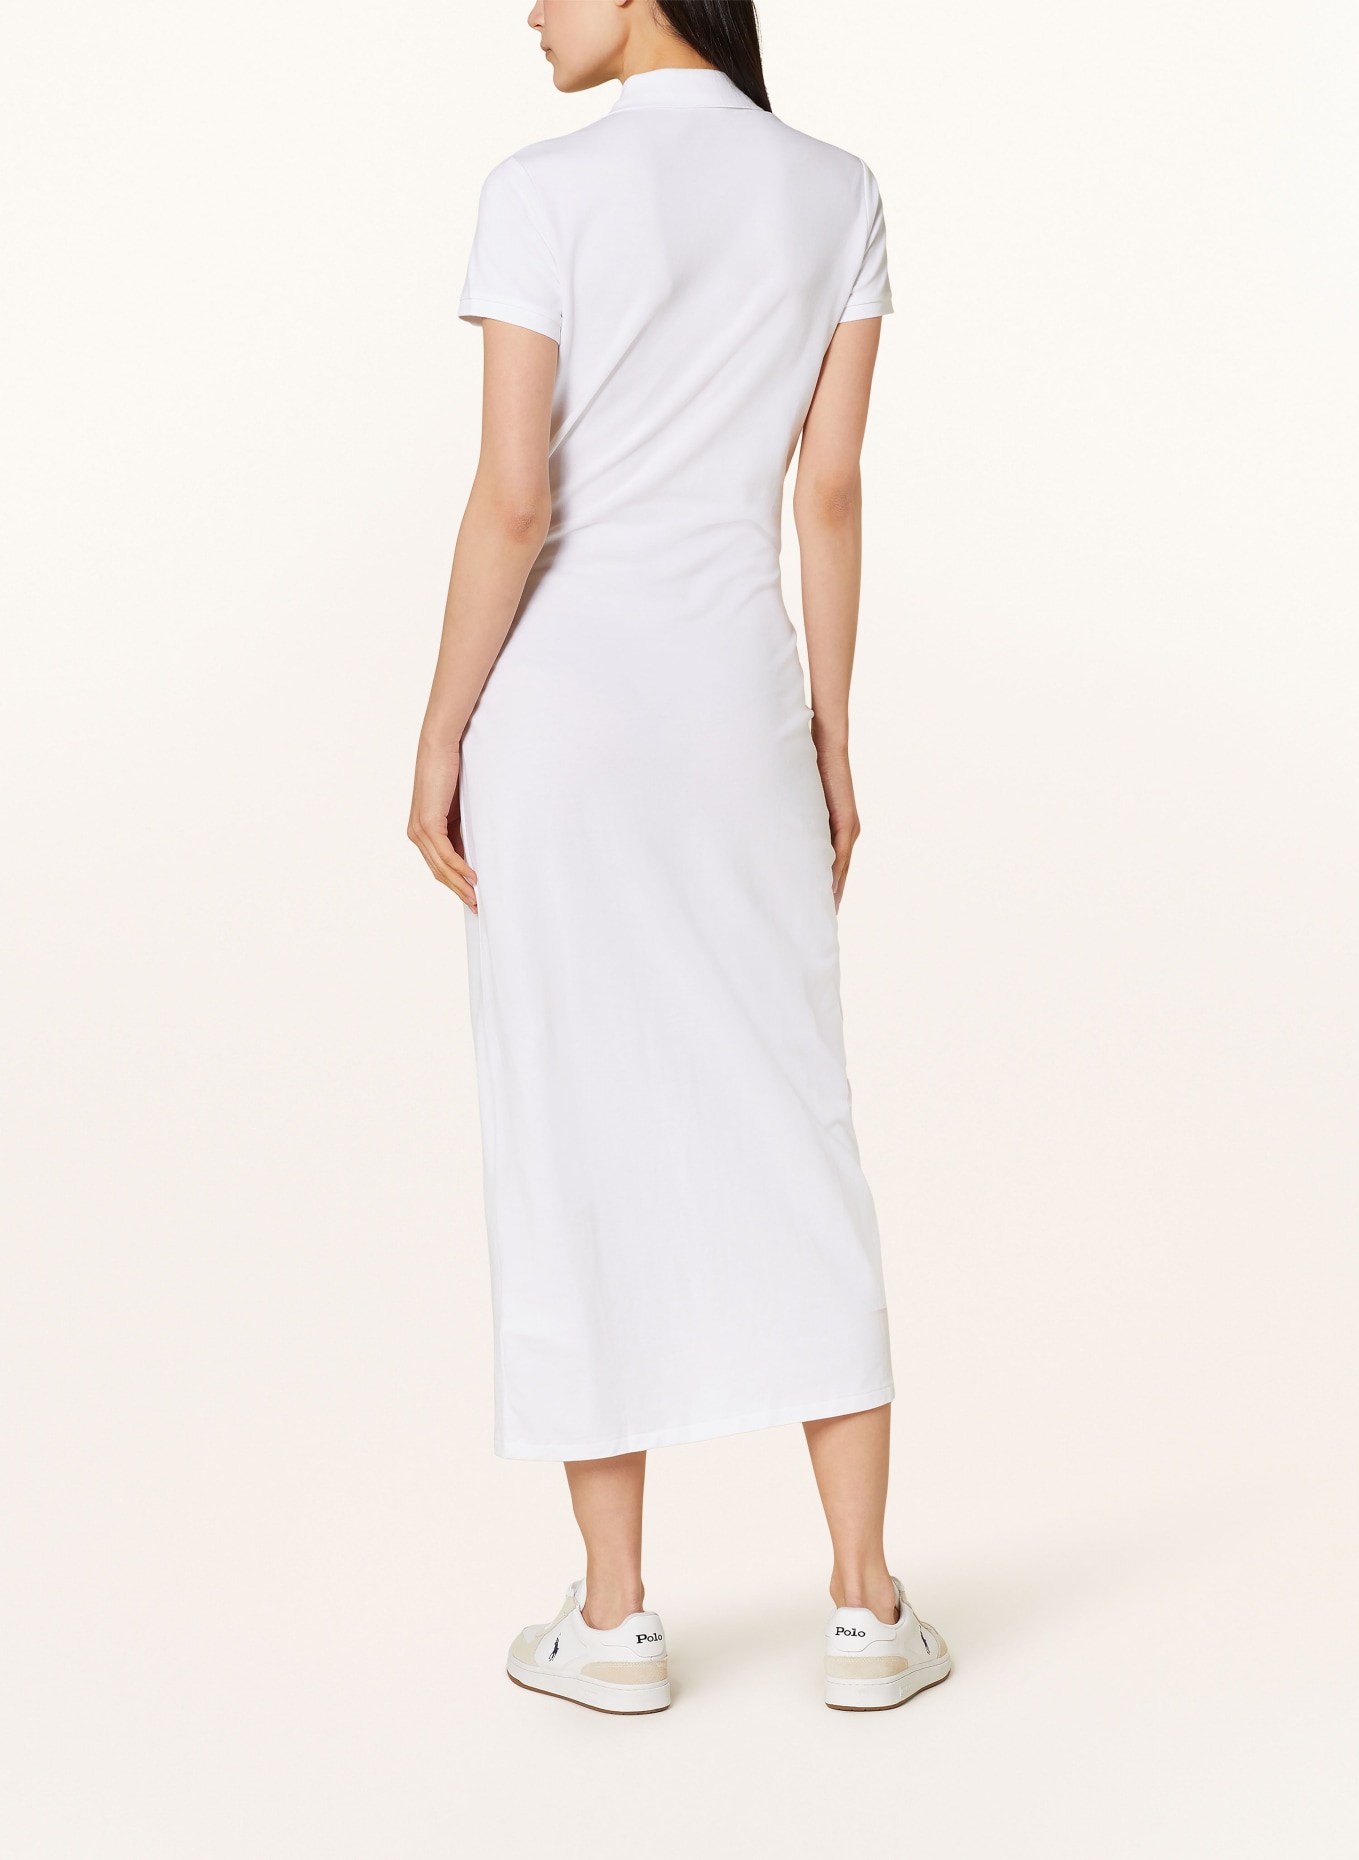 POLO RALPH LAUREN Piqué polo dress, Color: WHITE (Image 3)